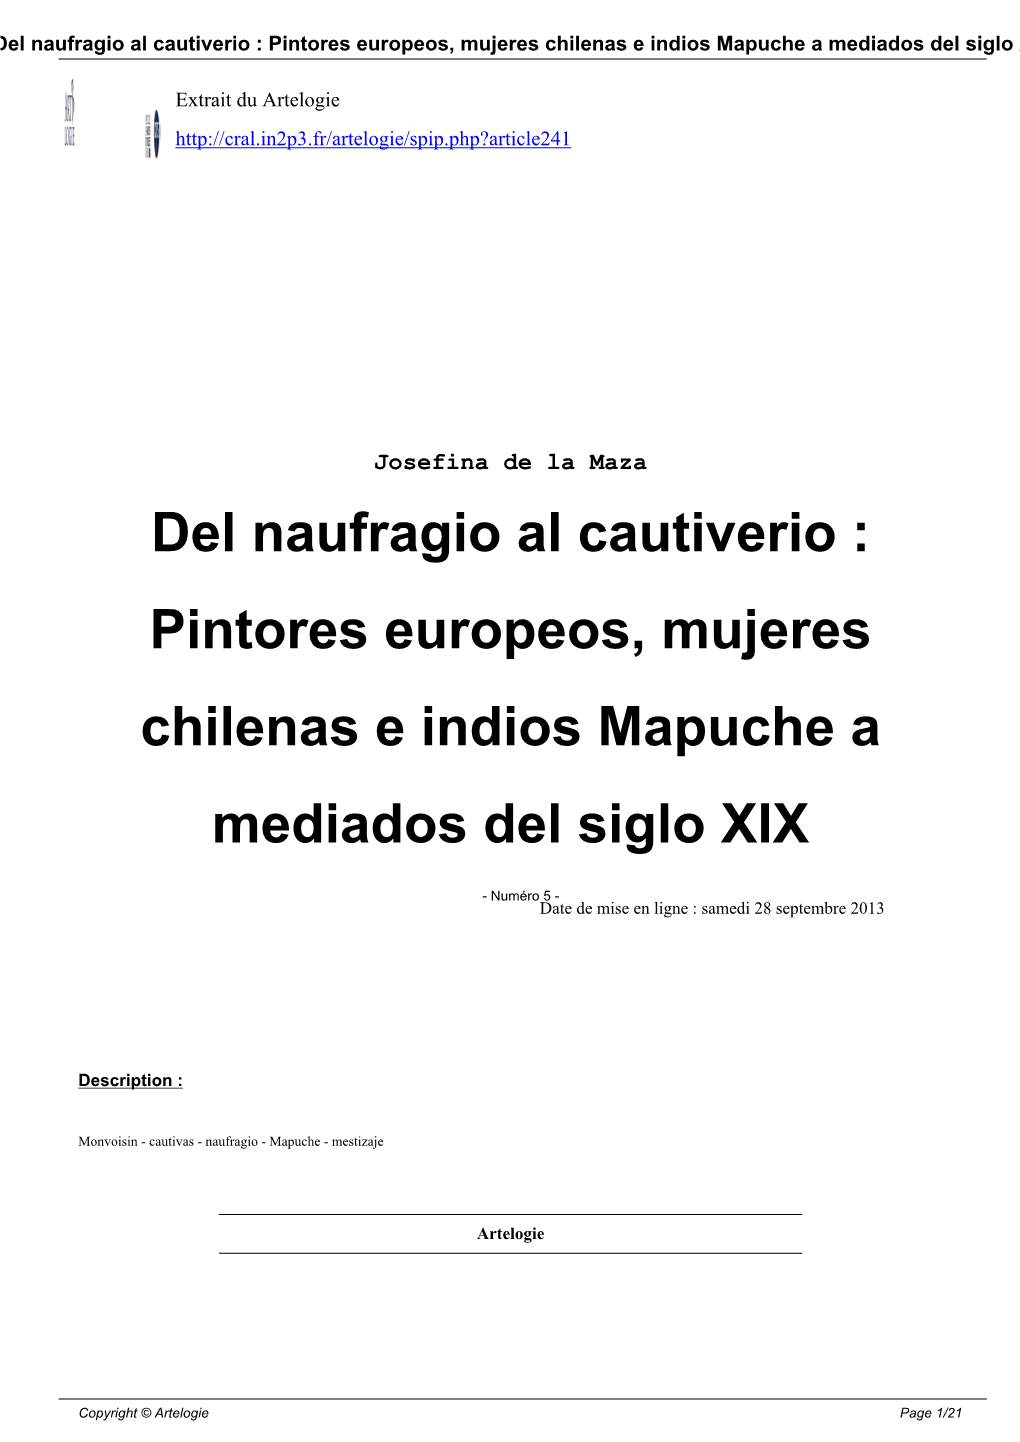 Del Naufragio Al Cautiverio : Pintores Europeos, Mujeres Chilenas E Indios Mapuche a Mediados Del Siglo XIX